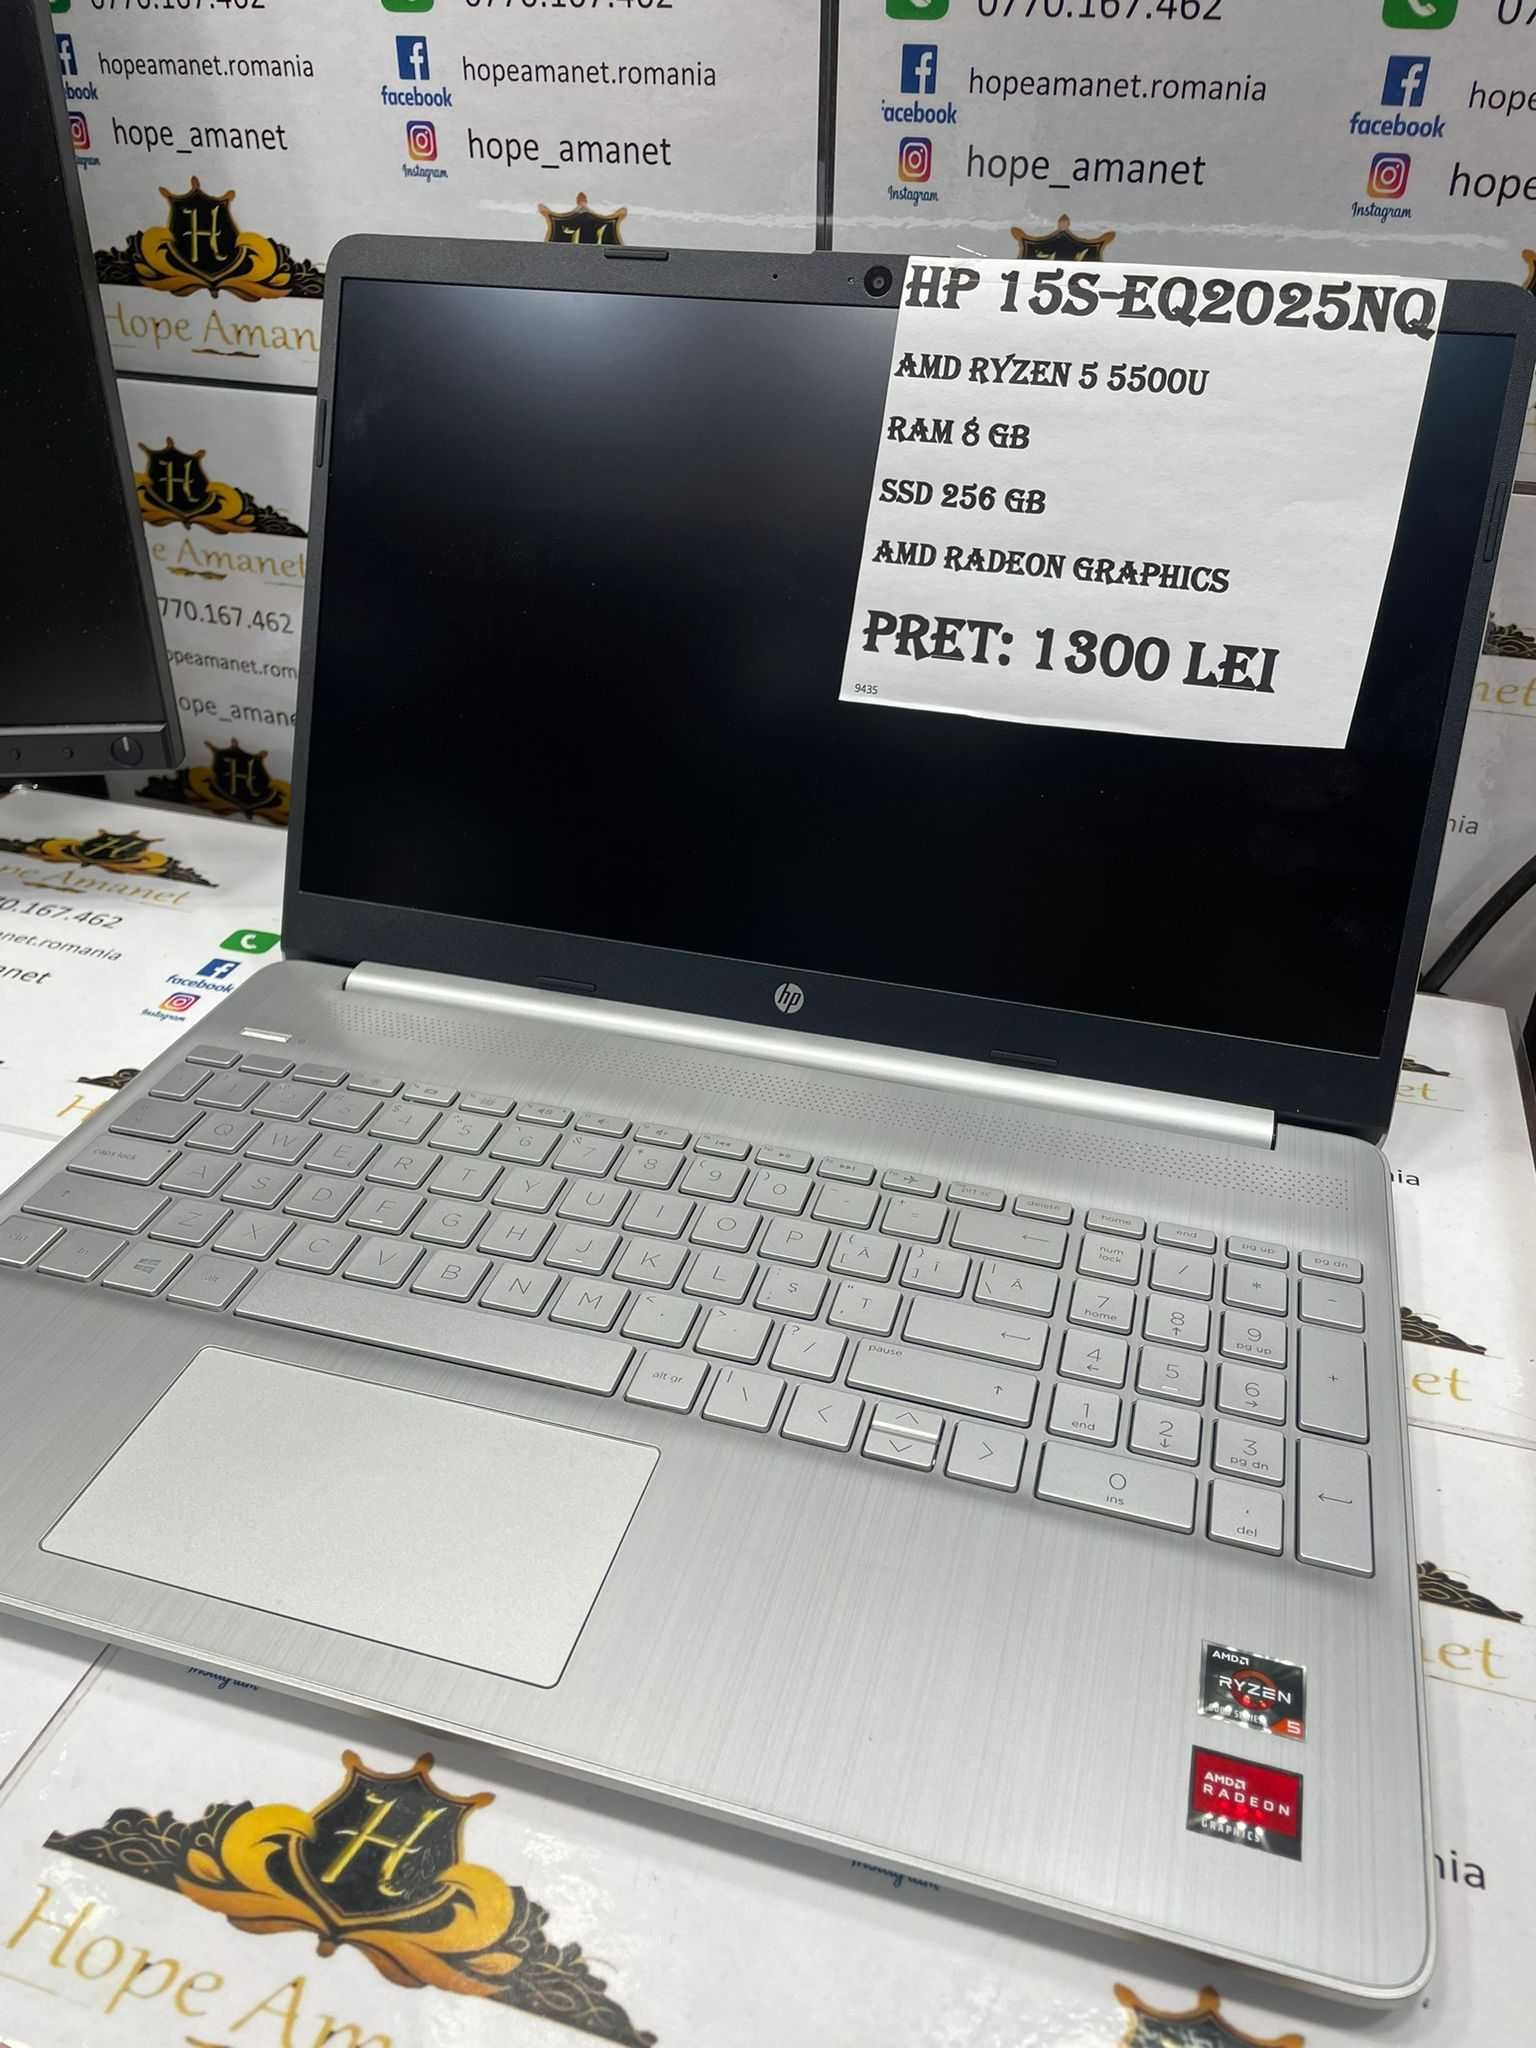 Hope Amanet P12 - Laptop HP 15S-EQ2025NQ